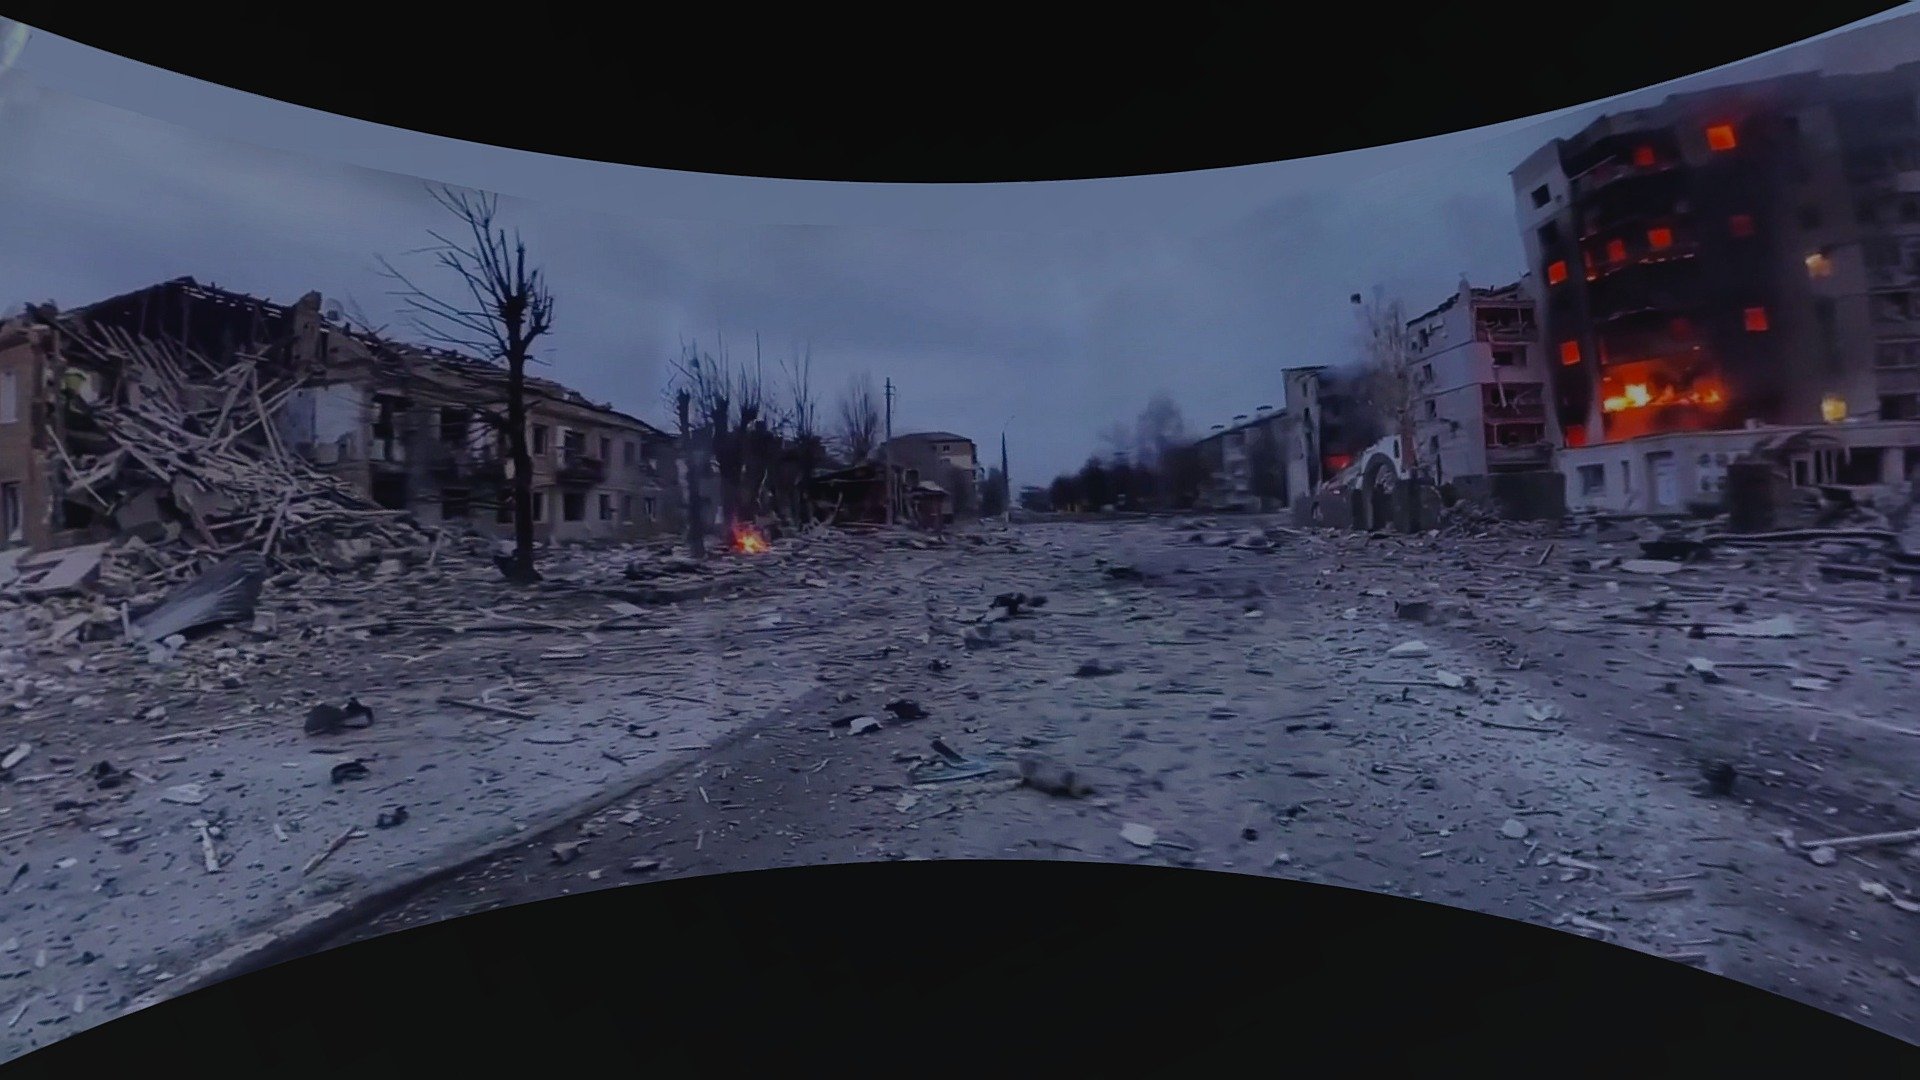 360 Panorama + 3D Model Ukraine- Russian war 2022

(Це панорама на 360° + 3D модель) 3d model